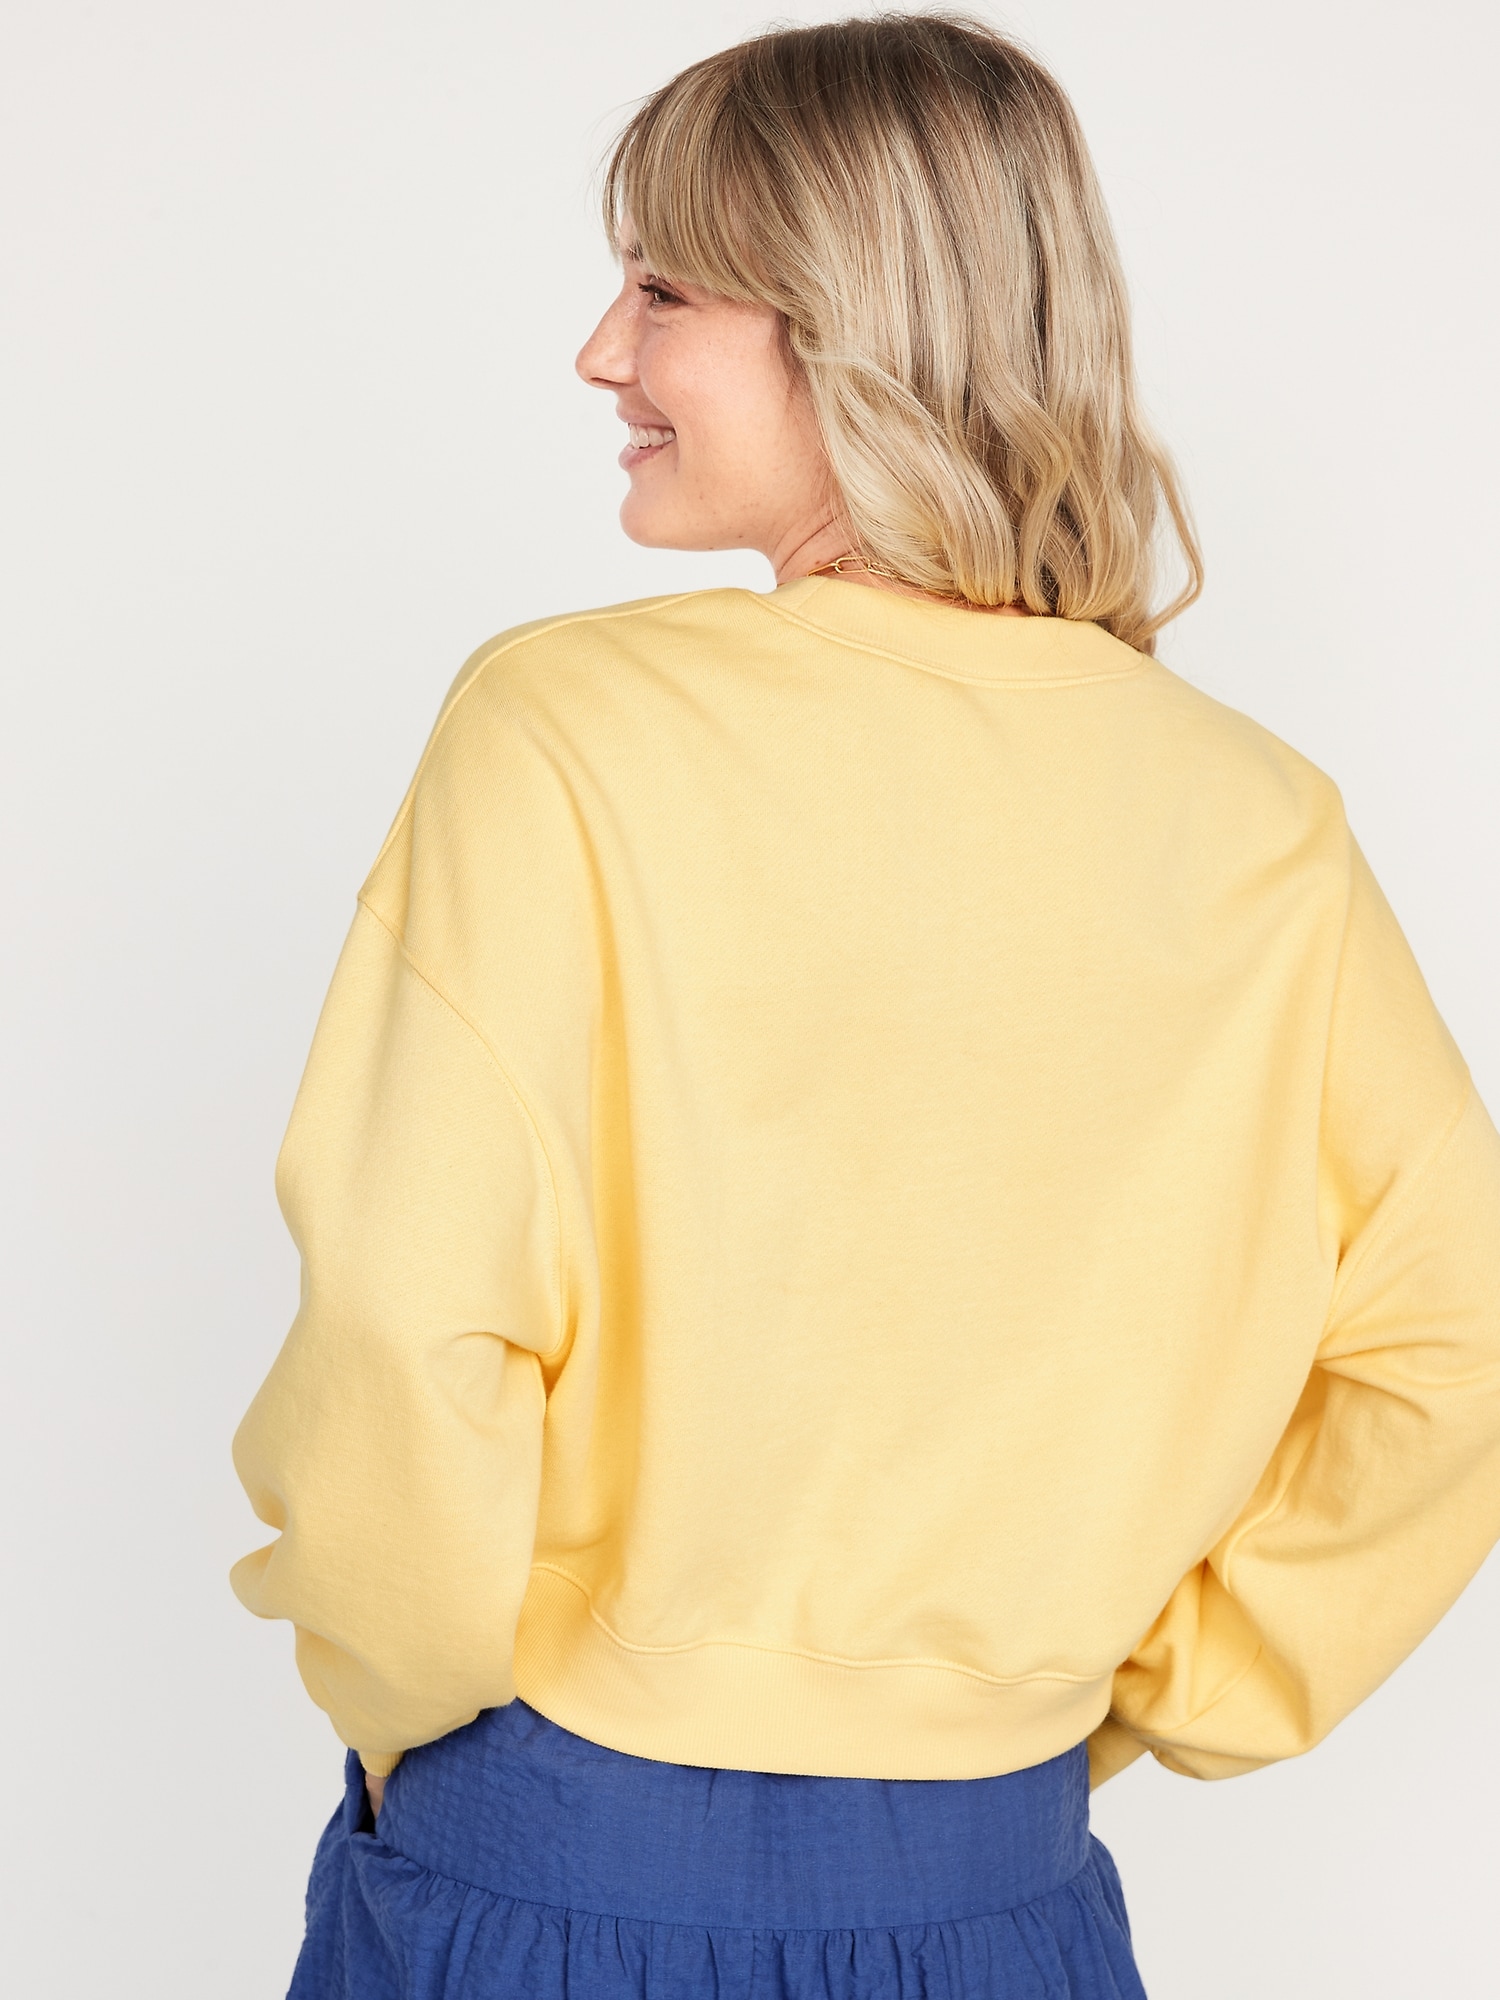 Oversized Long-Sleeve Sweatshirt for Women | Old Navy